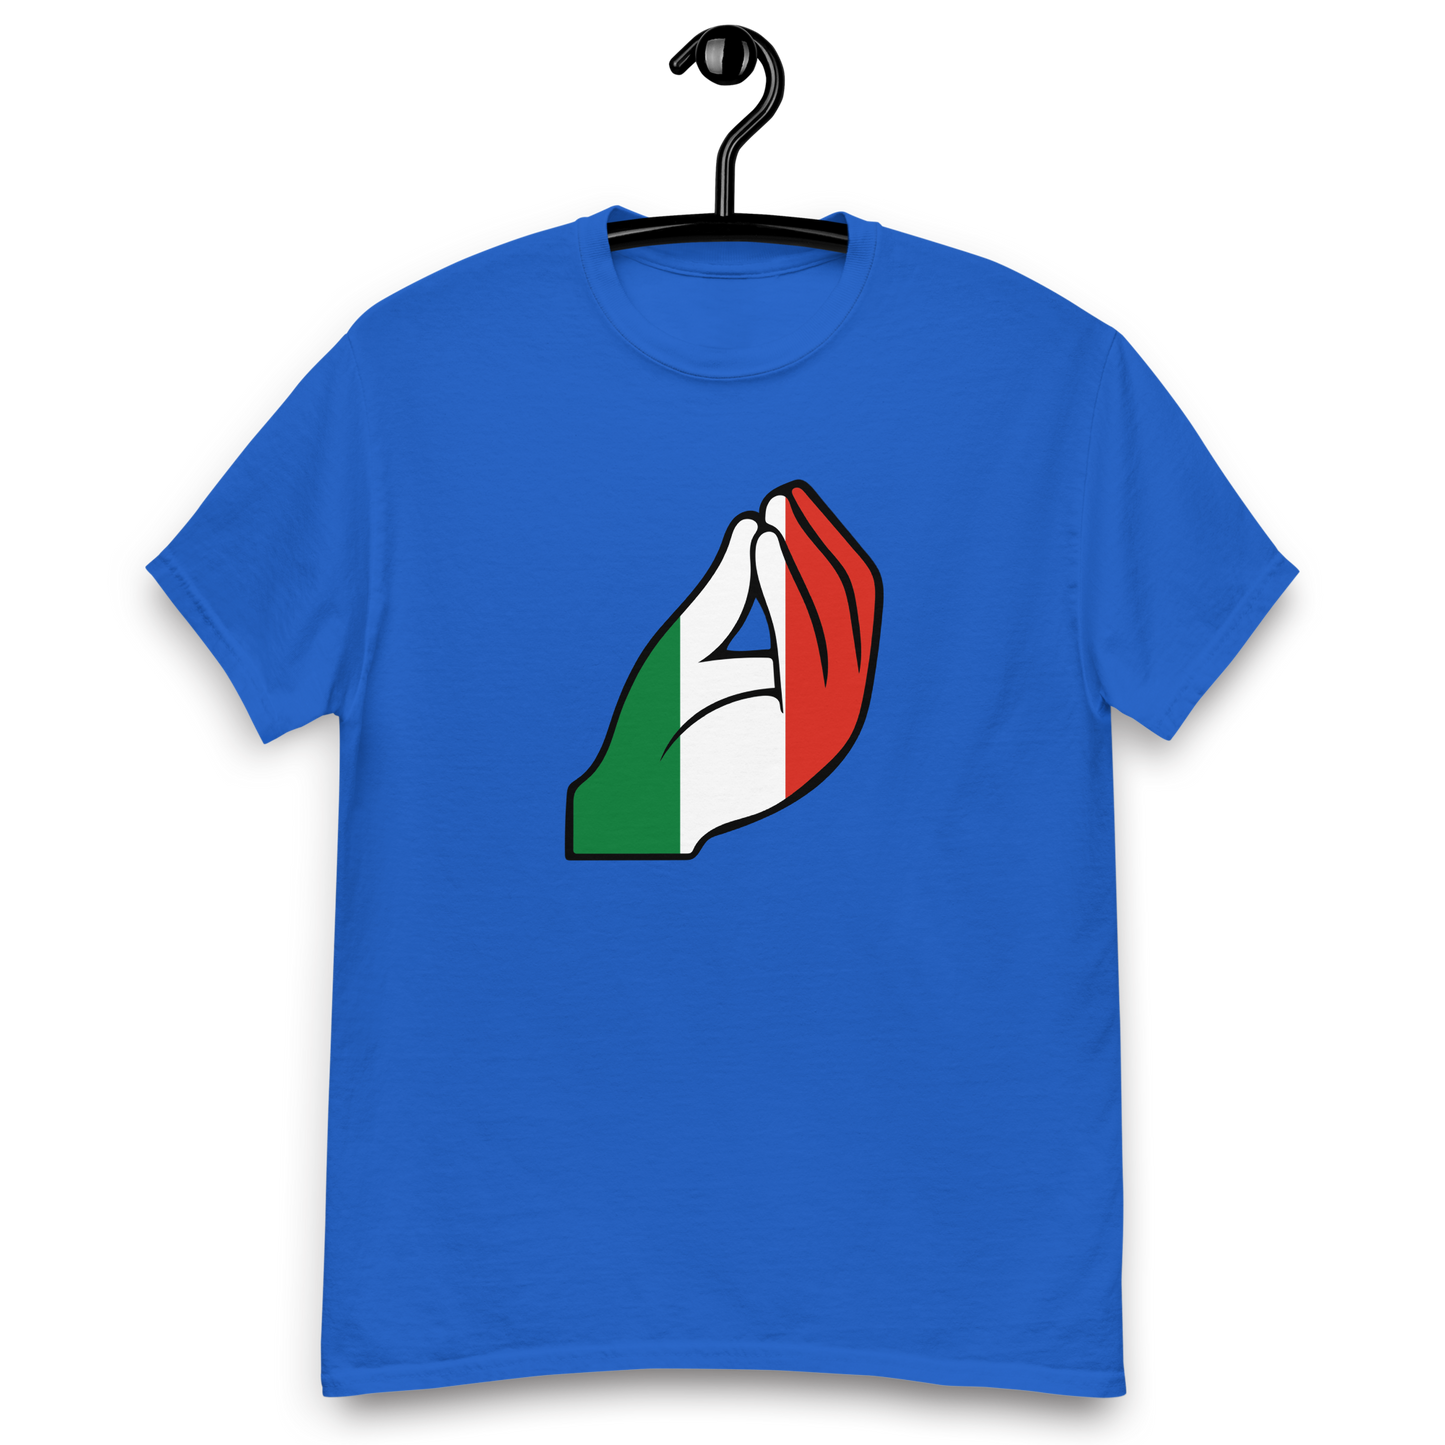 Italian Capiche Hand T-Shirt: Symbolic Italian Gesture- Vintage Tee for Italians